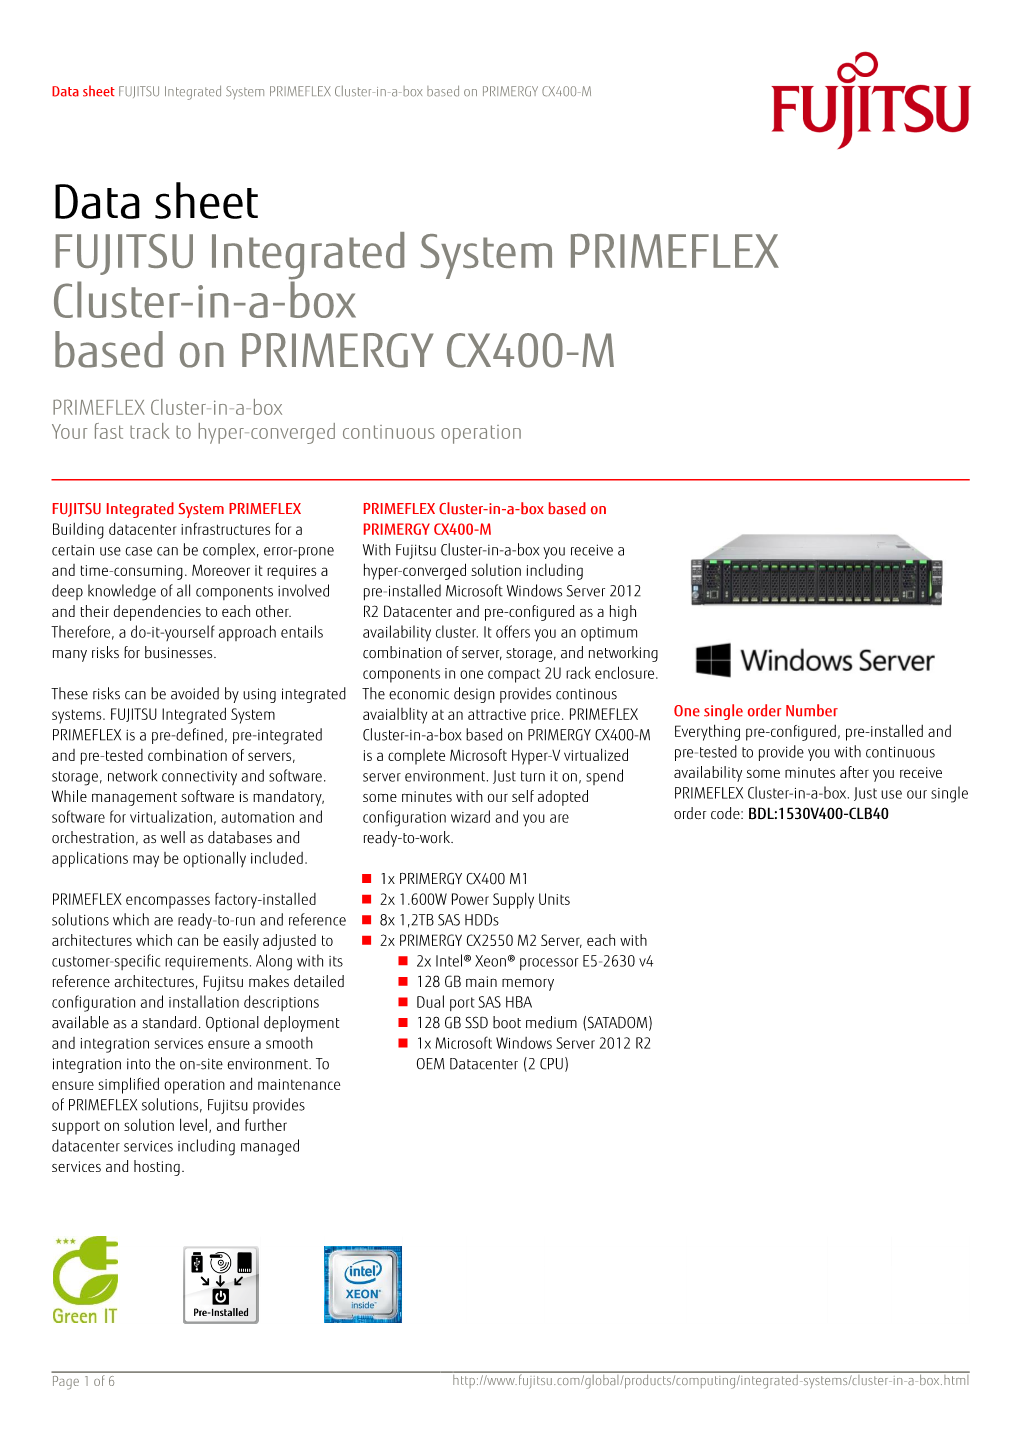 FUJITSU Integrated System PRIMEFLEX Cluster-In-A-Box Based on PRIMERGY CX400-M